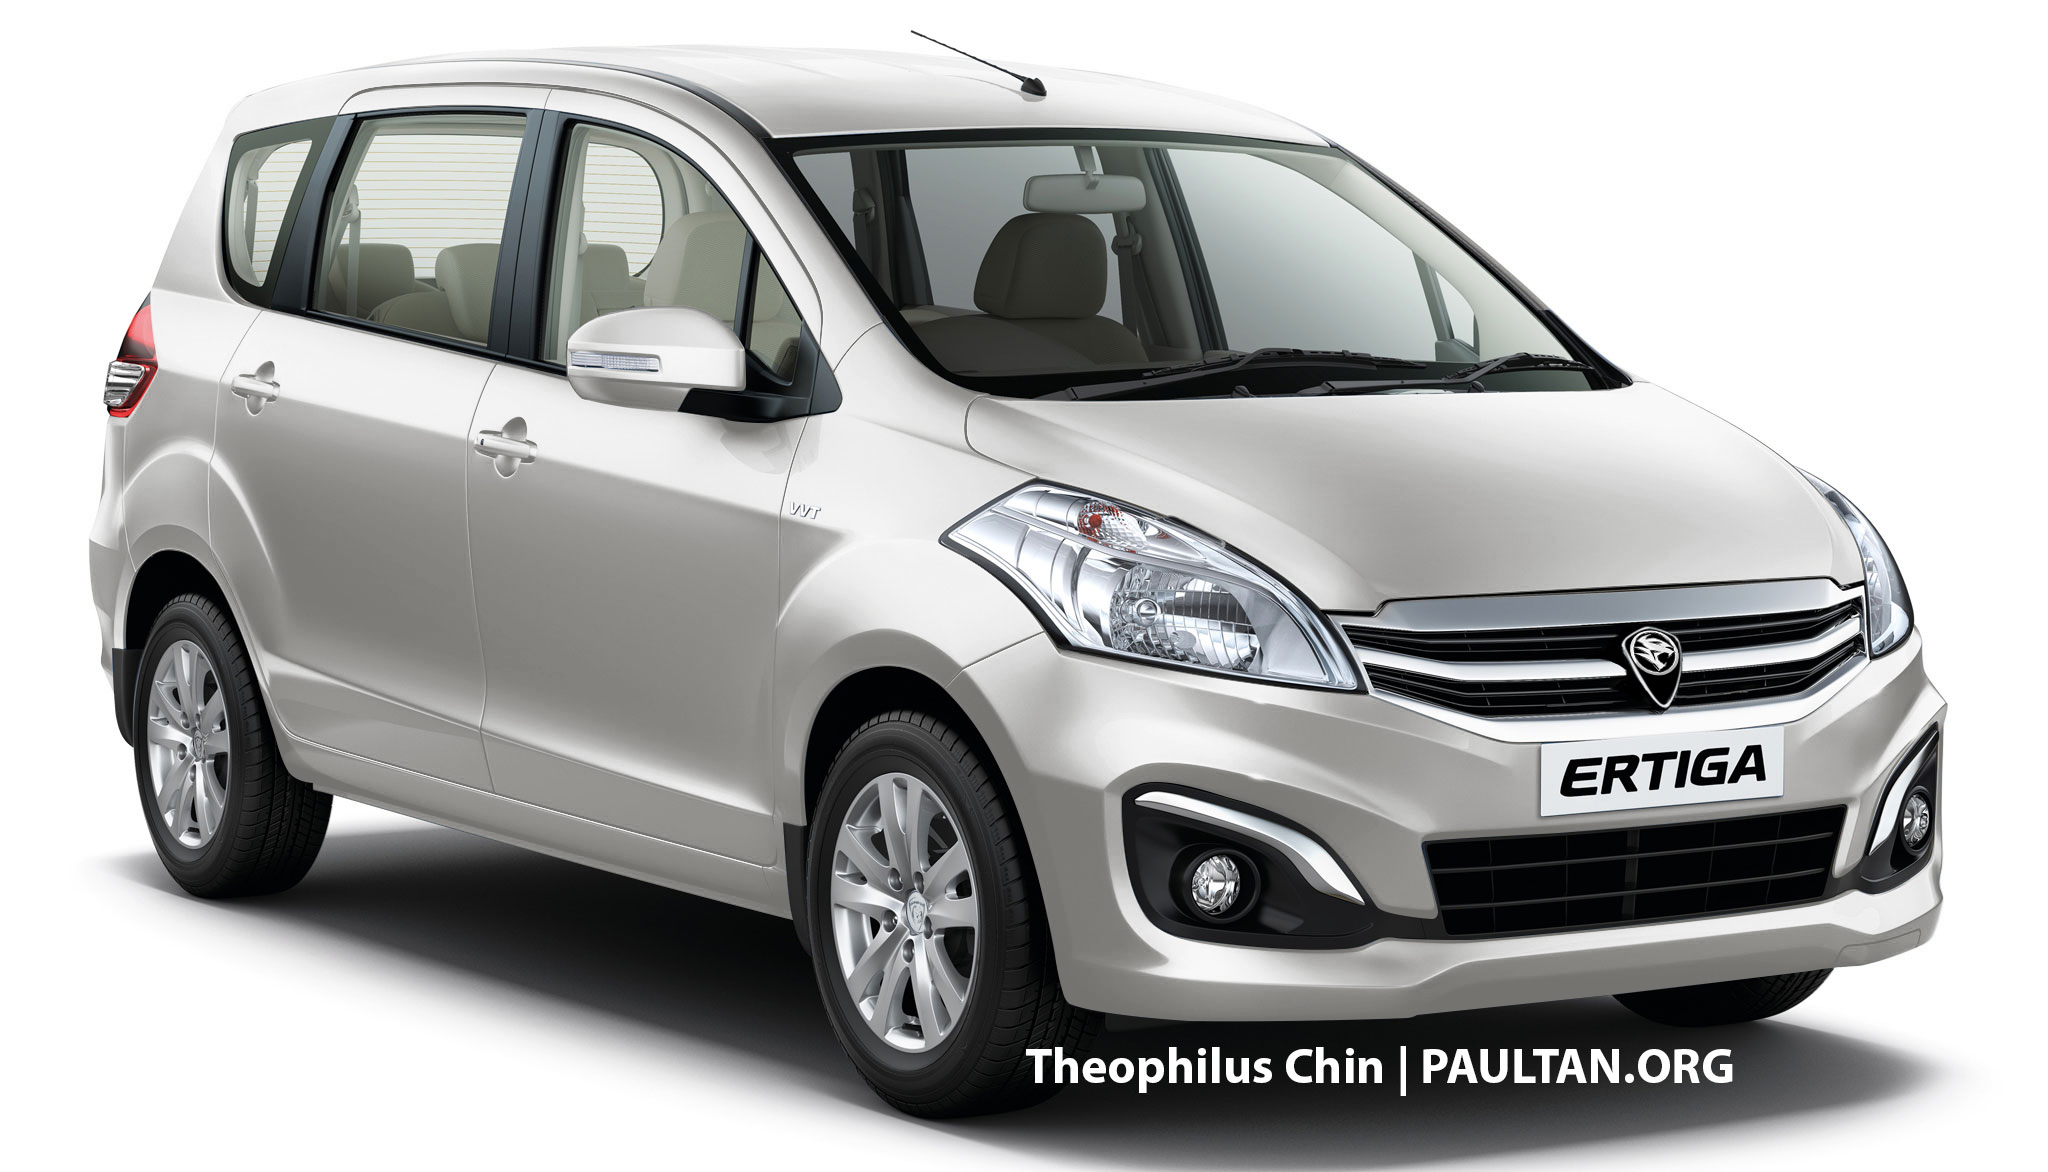 New Proton Ertiga MPV details revealed - a rebadged Suzuki, 1.4 litre ...